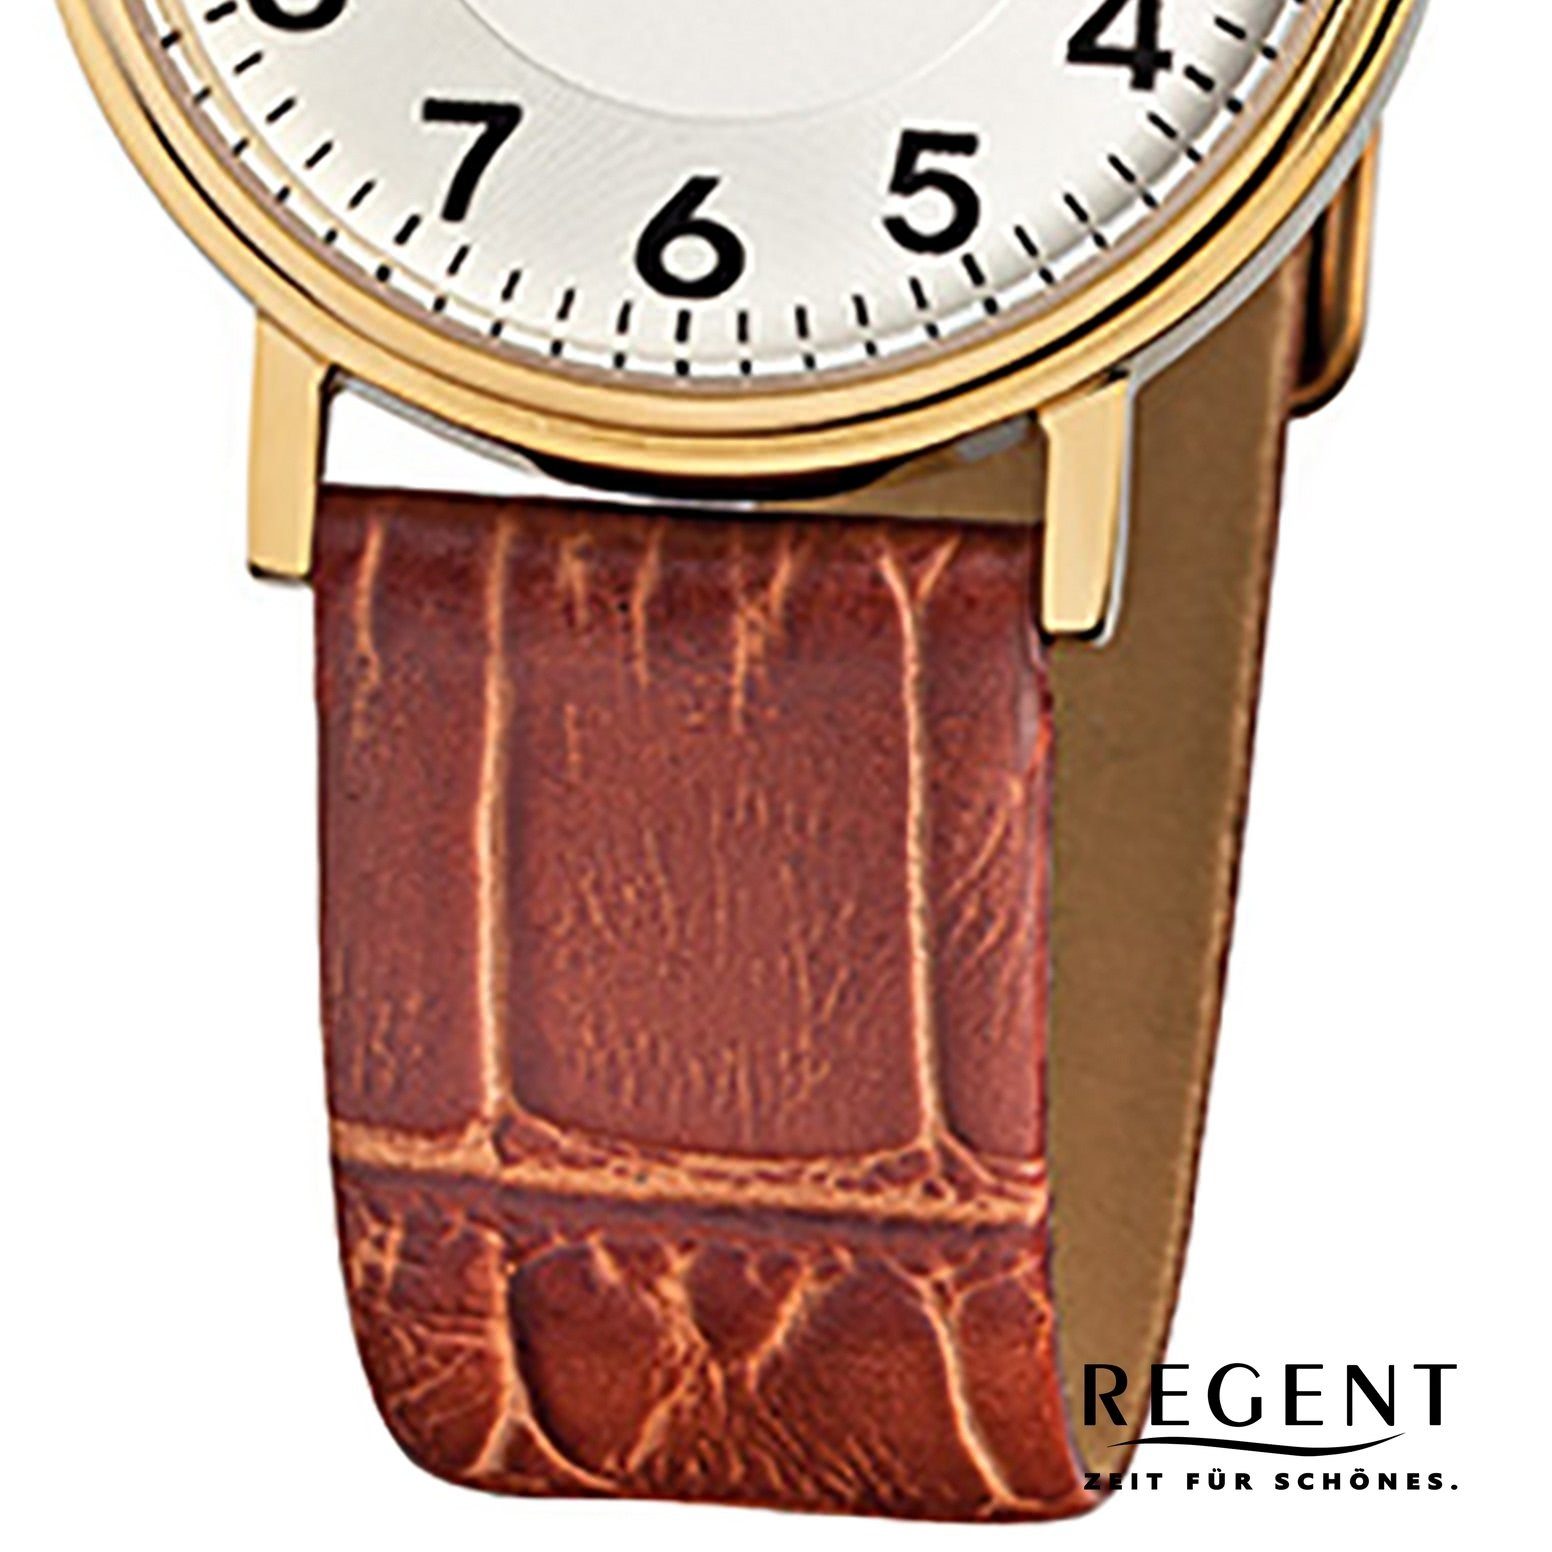 Regent Quarzuhr Regent braun Armbanduhr Lederarmband Damen-Armbanduhr F-328, klein Damen rund, 28mm), (ca. Analog